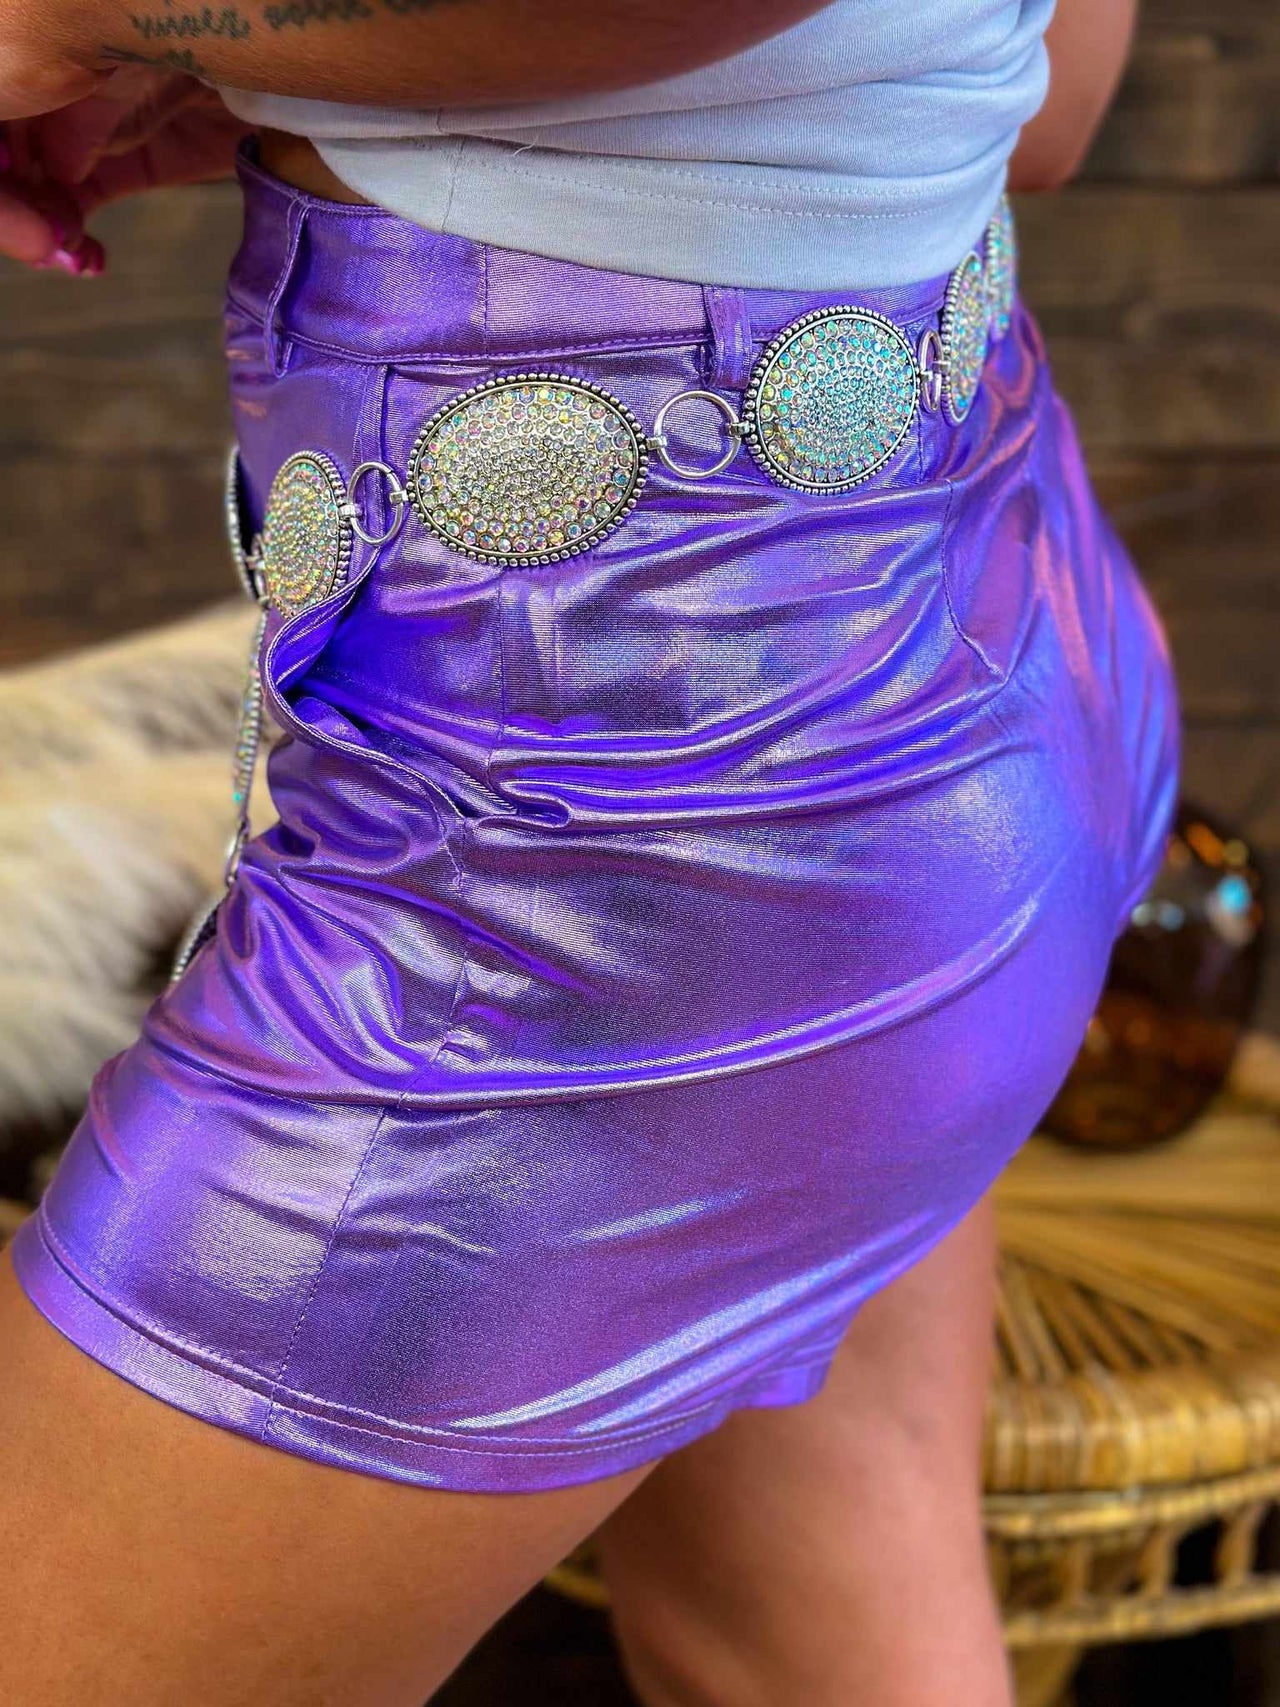 Faux leather shorts in metallic purple.